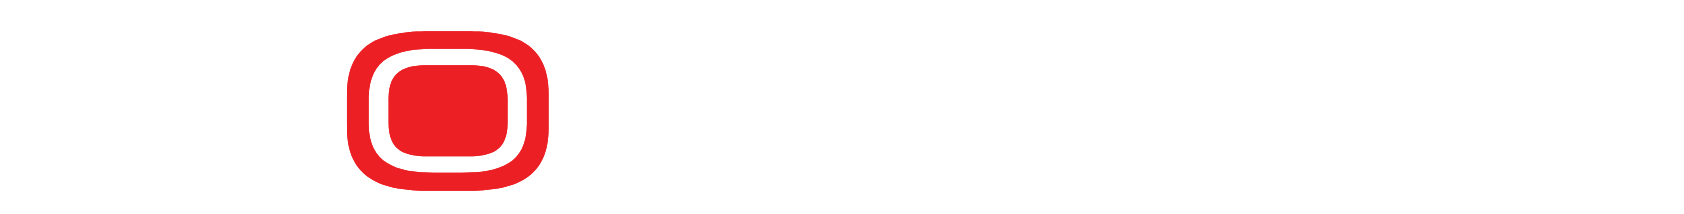 Sportradar Logo groß für dunkle Hintergründe (transparentes PNG)